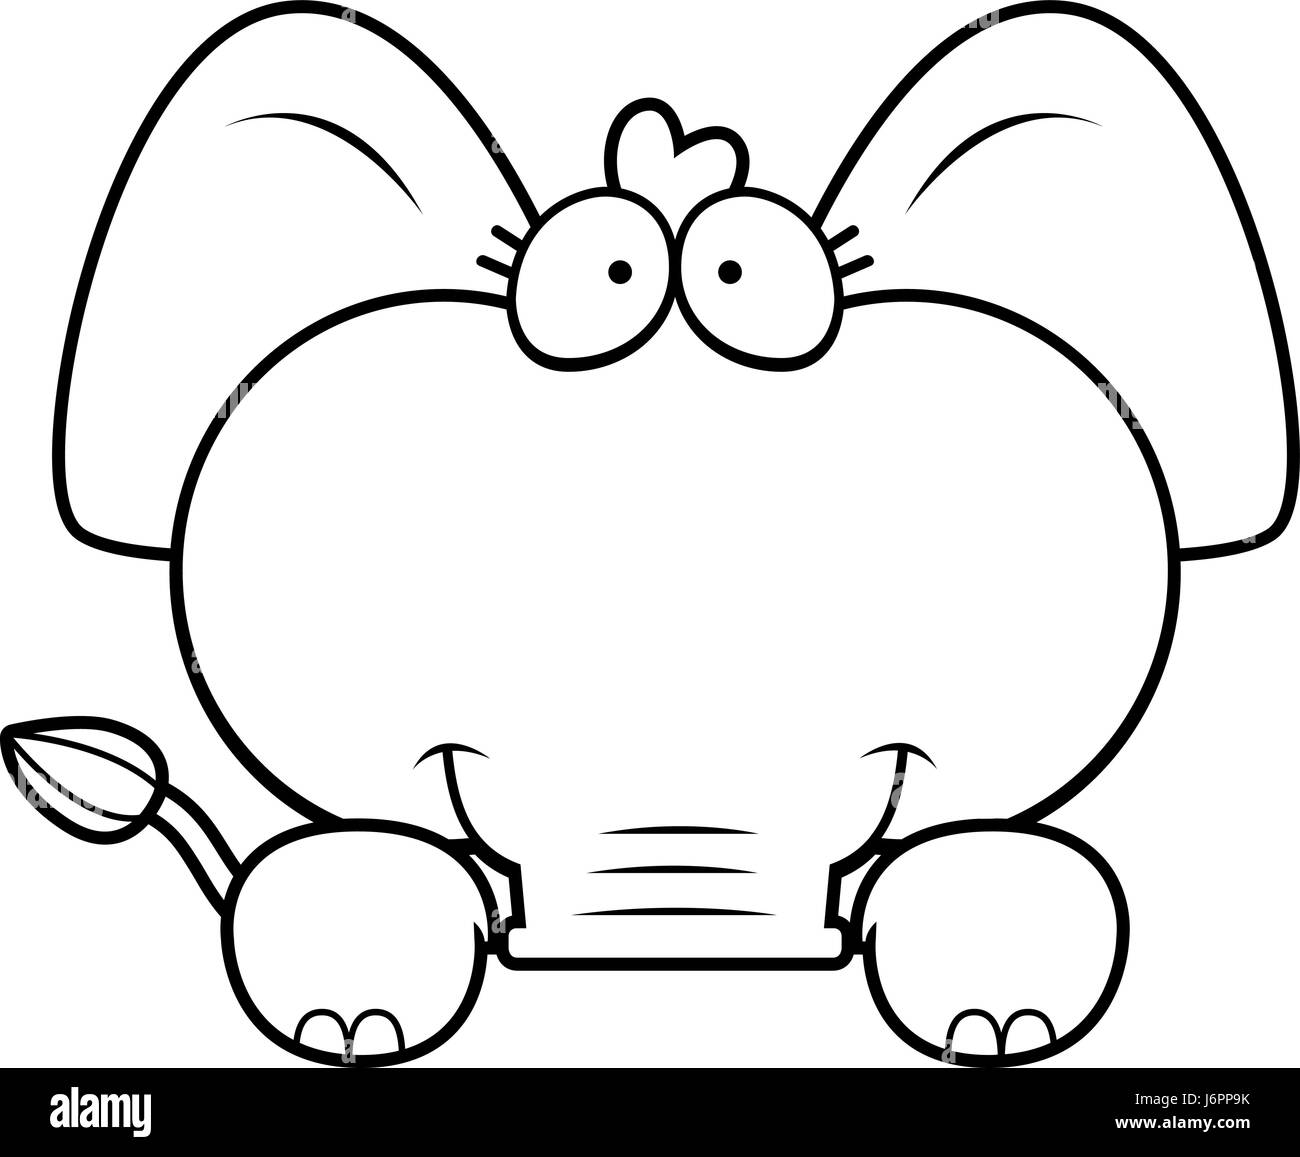 A cartoon illustration of a little elephant peeking over an object. Stock Vector